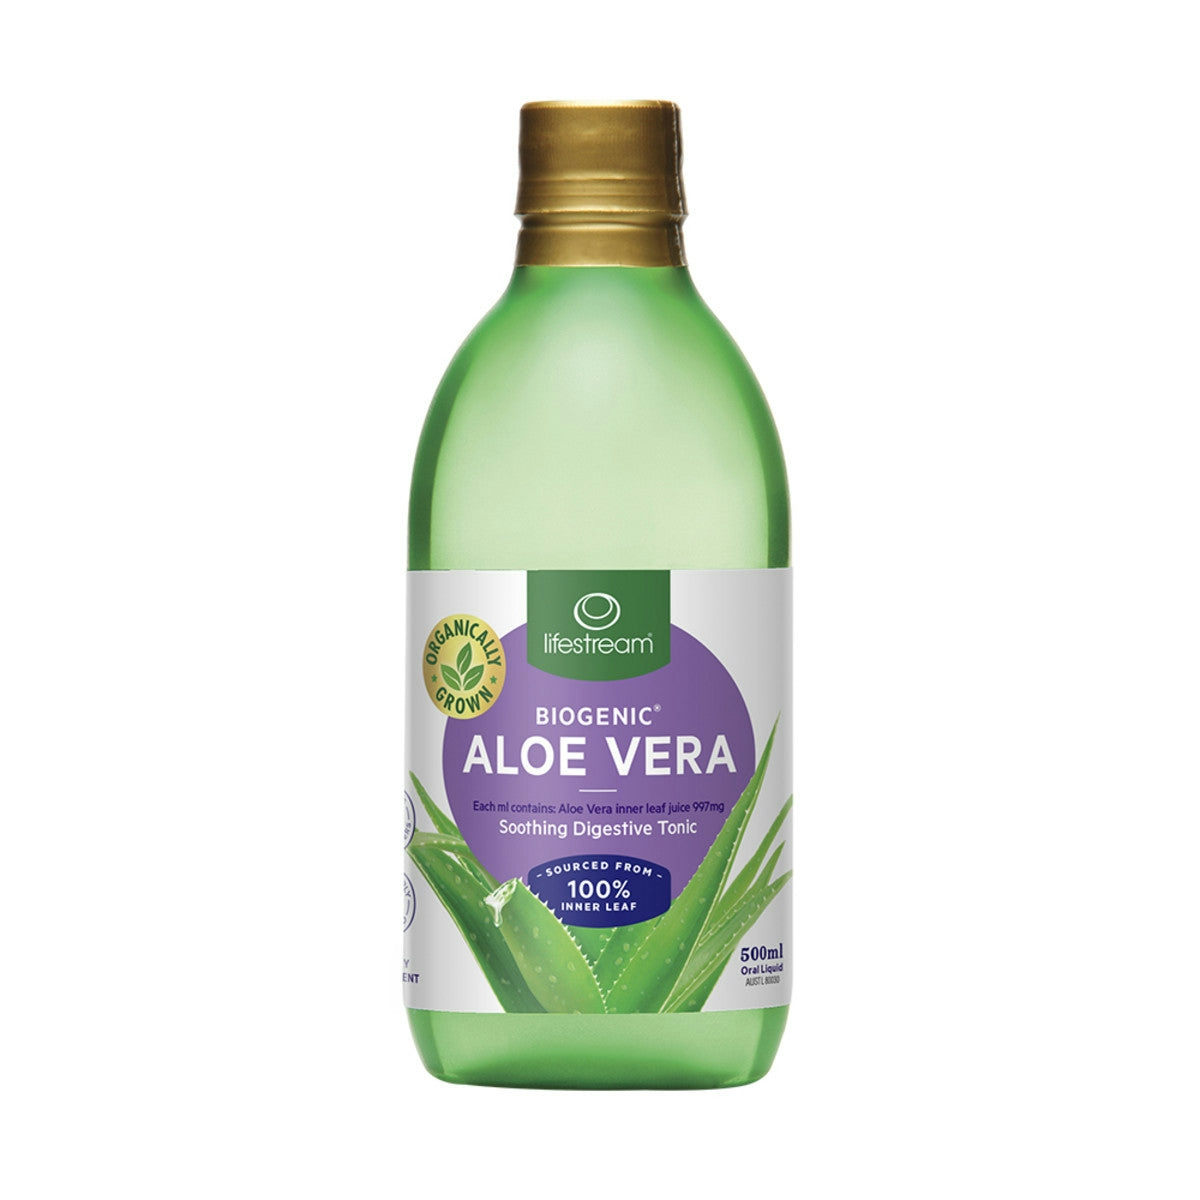 image of LifeStream Biogenic Aloe Vera Juice 500ml on white background 